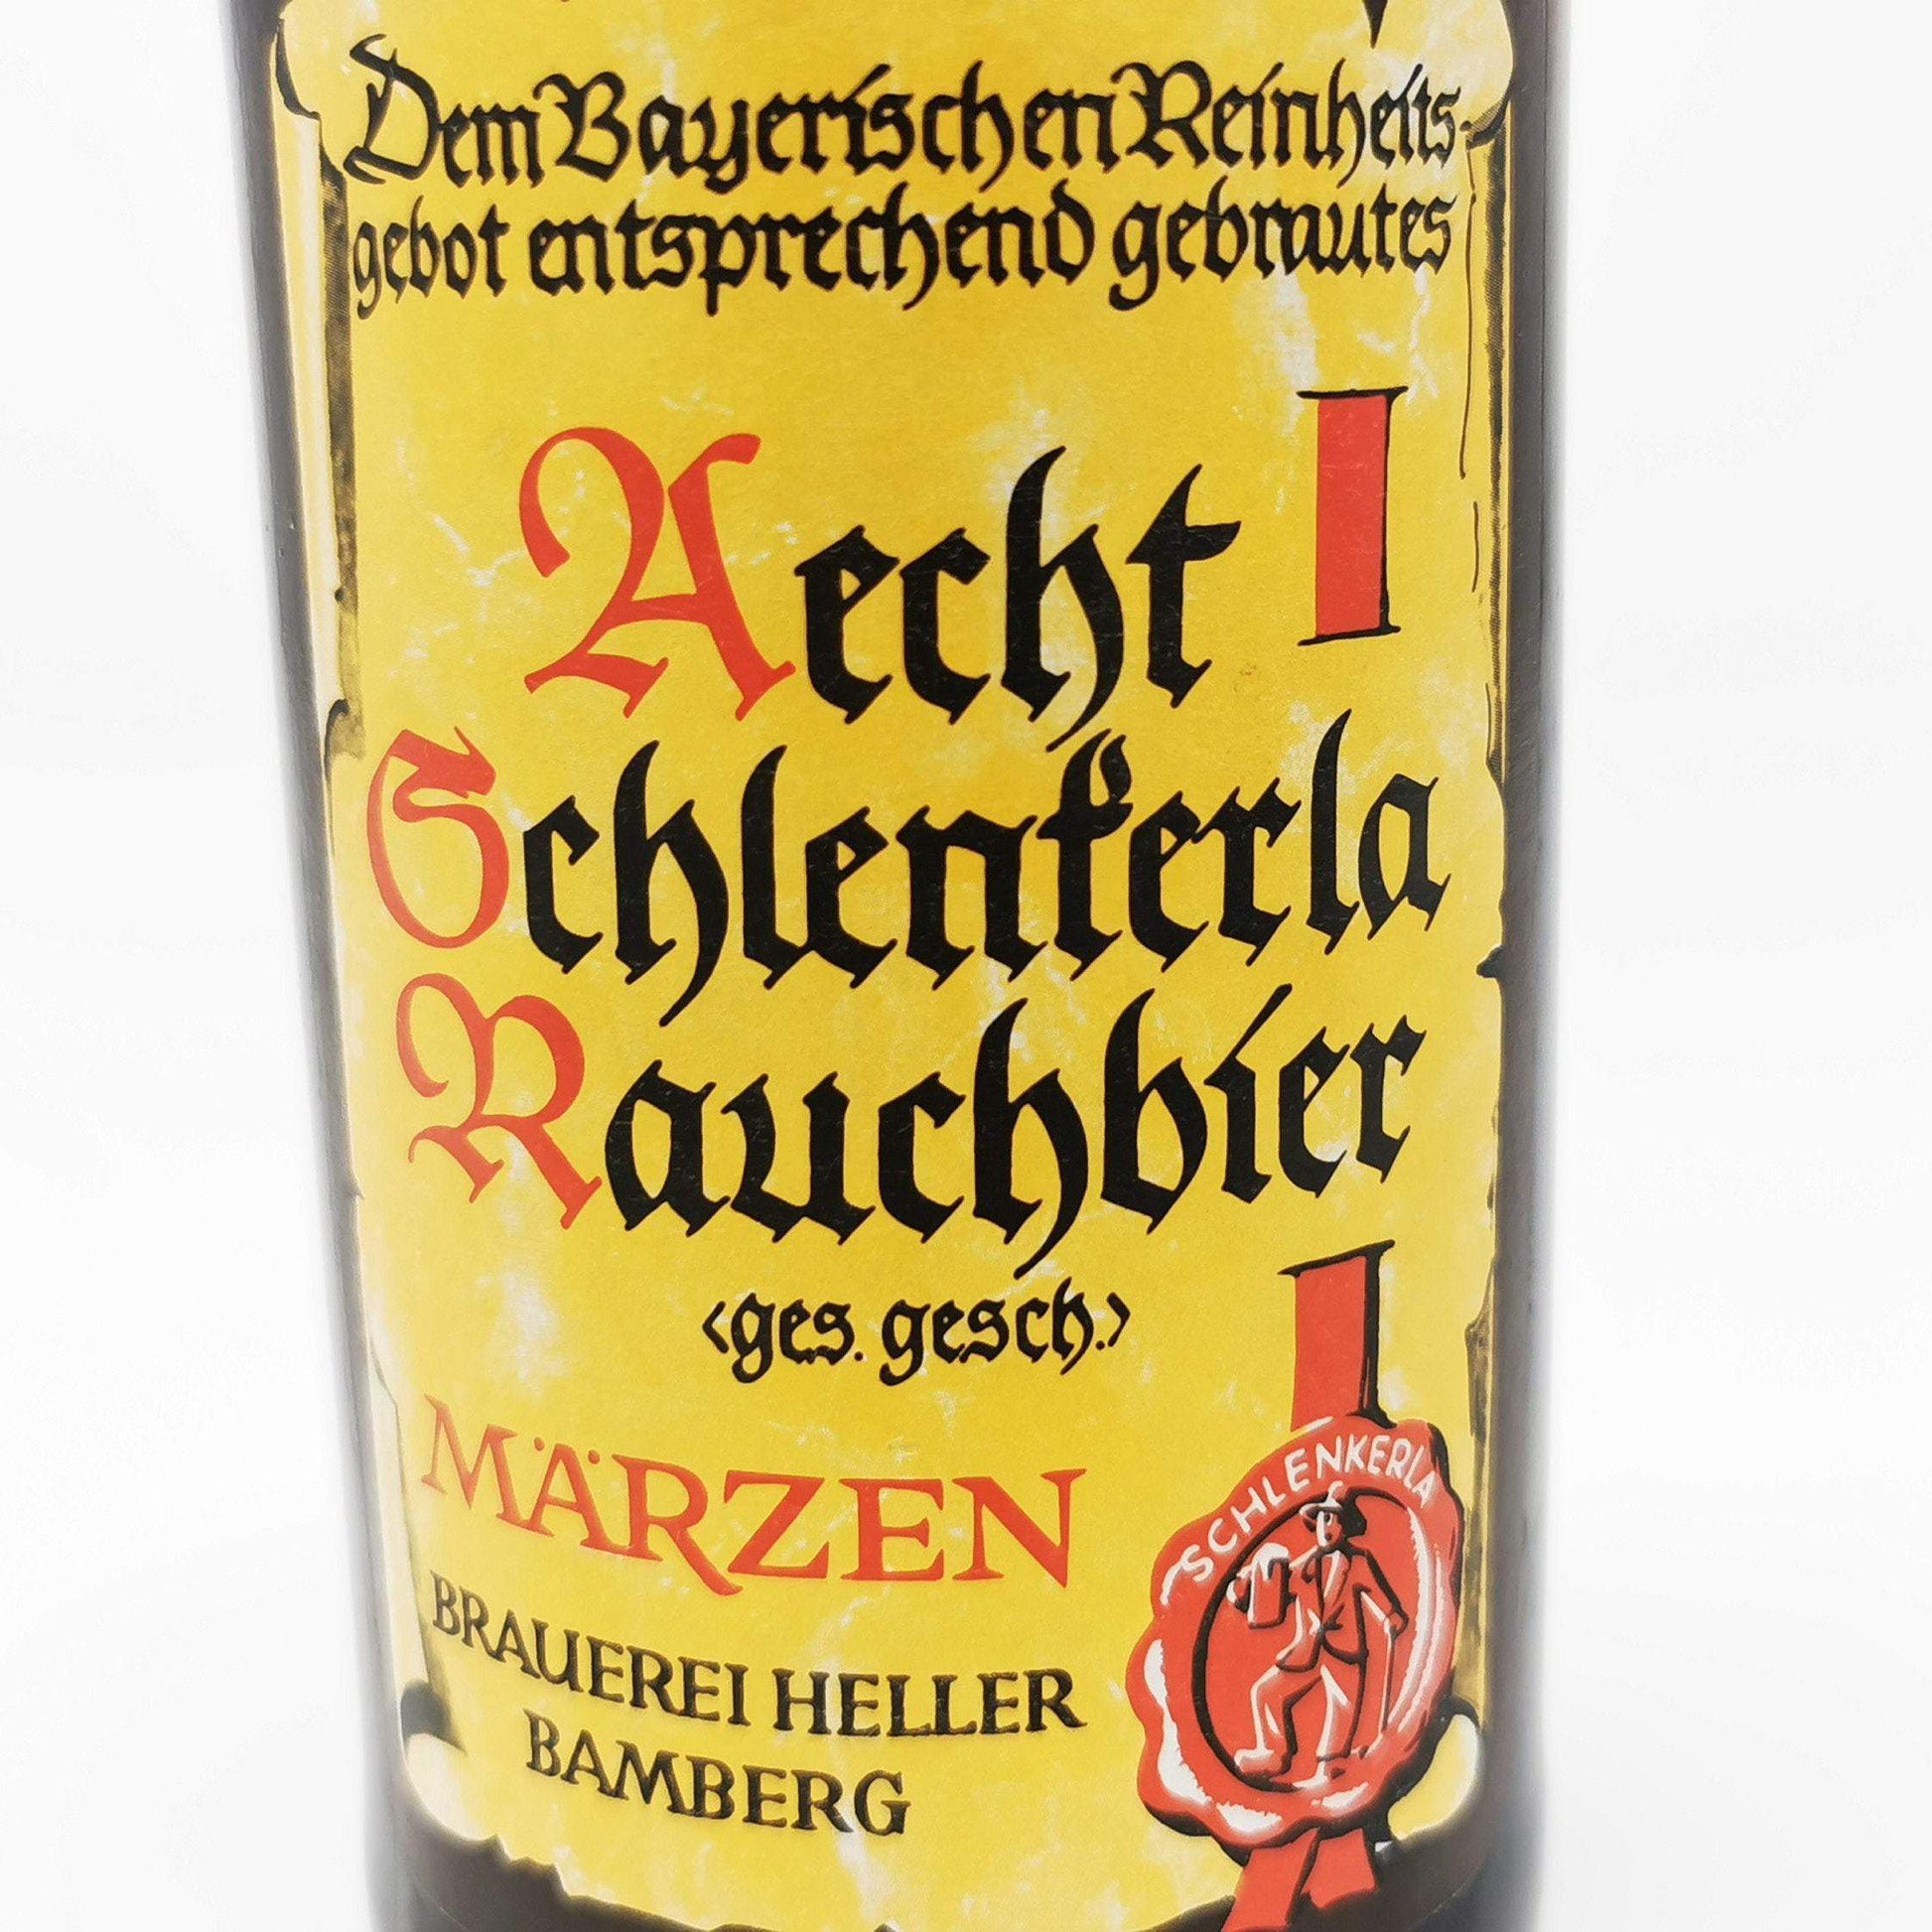 Schlenkerla Rauchbier Marzen Craft Beer Bottle Candle-Beer & Ale Bottle Candles-Adhock Homeware